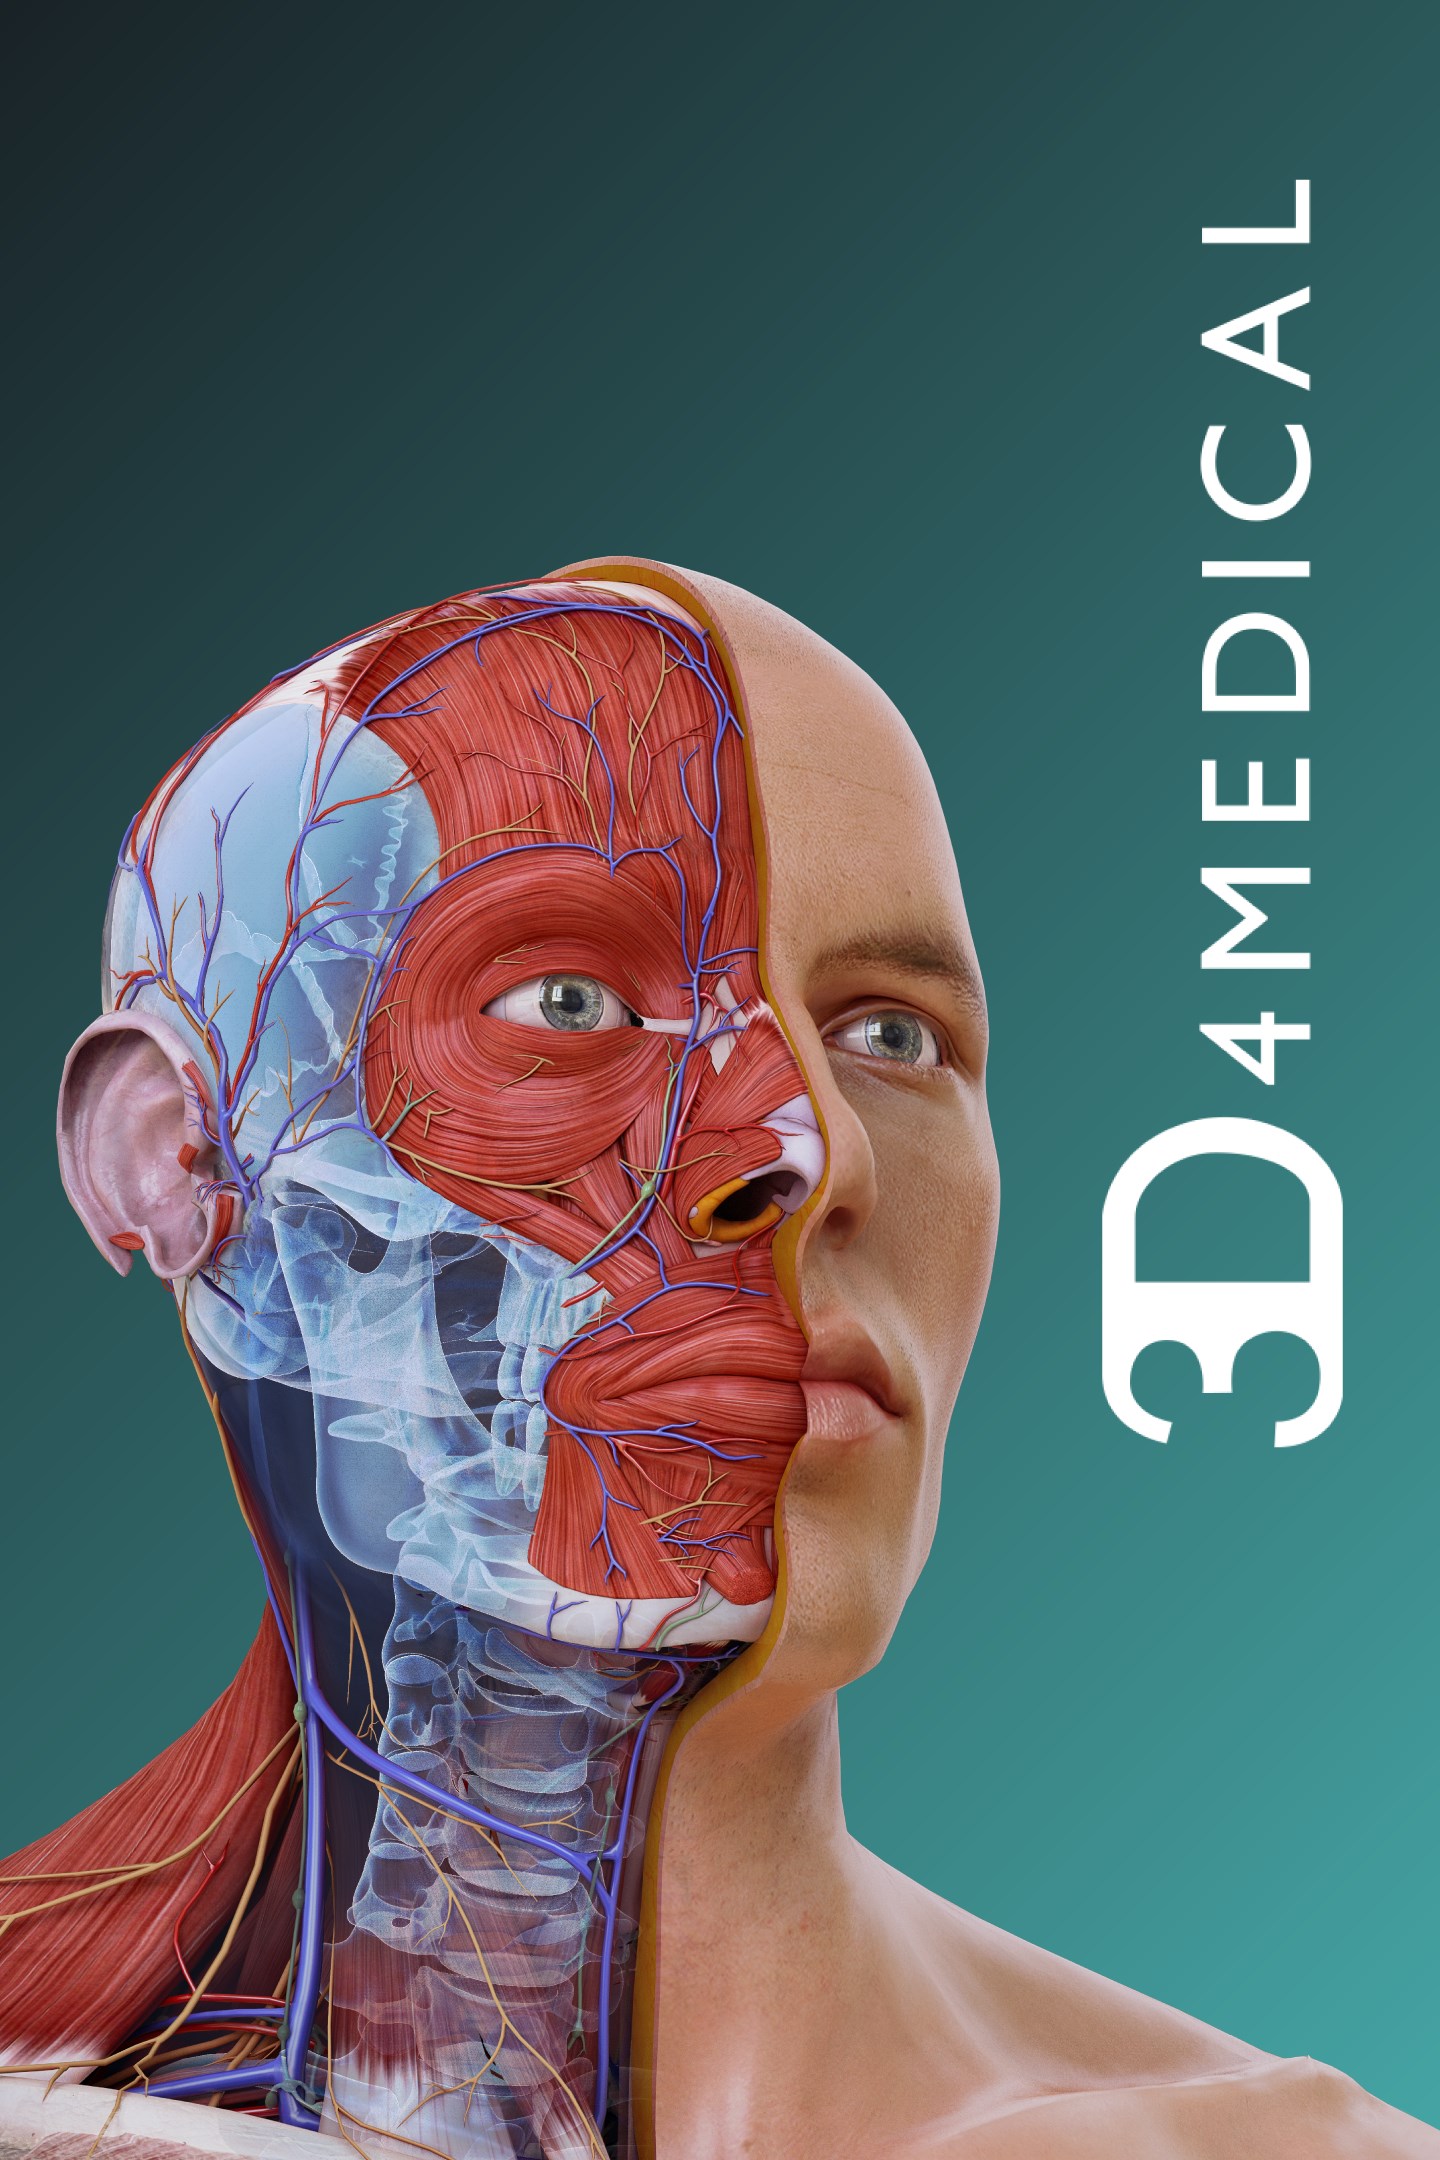 54 HQ Images Complete Anatomy App Customer Service / Complete Anatomy 21 3d Human Body Atlas App Su Google Play